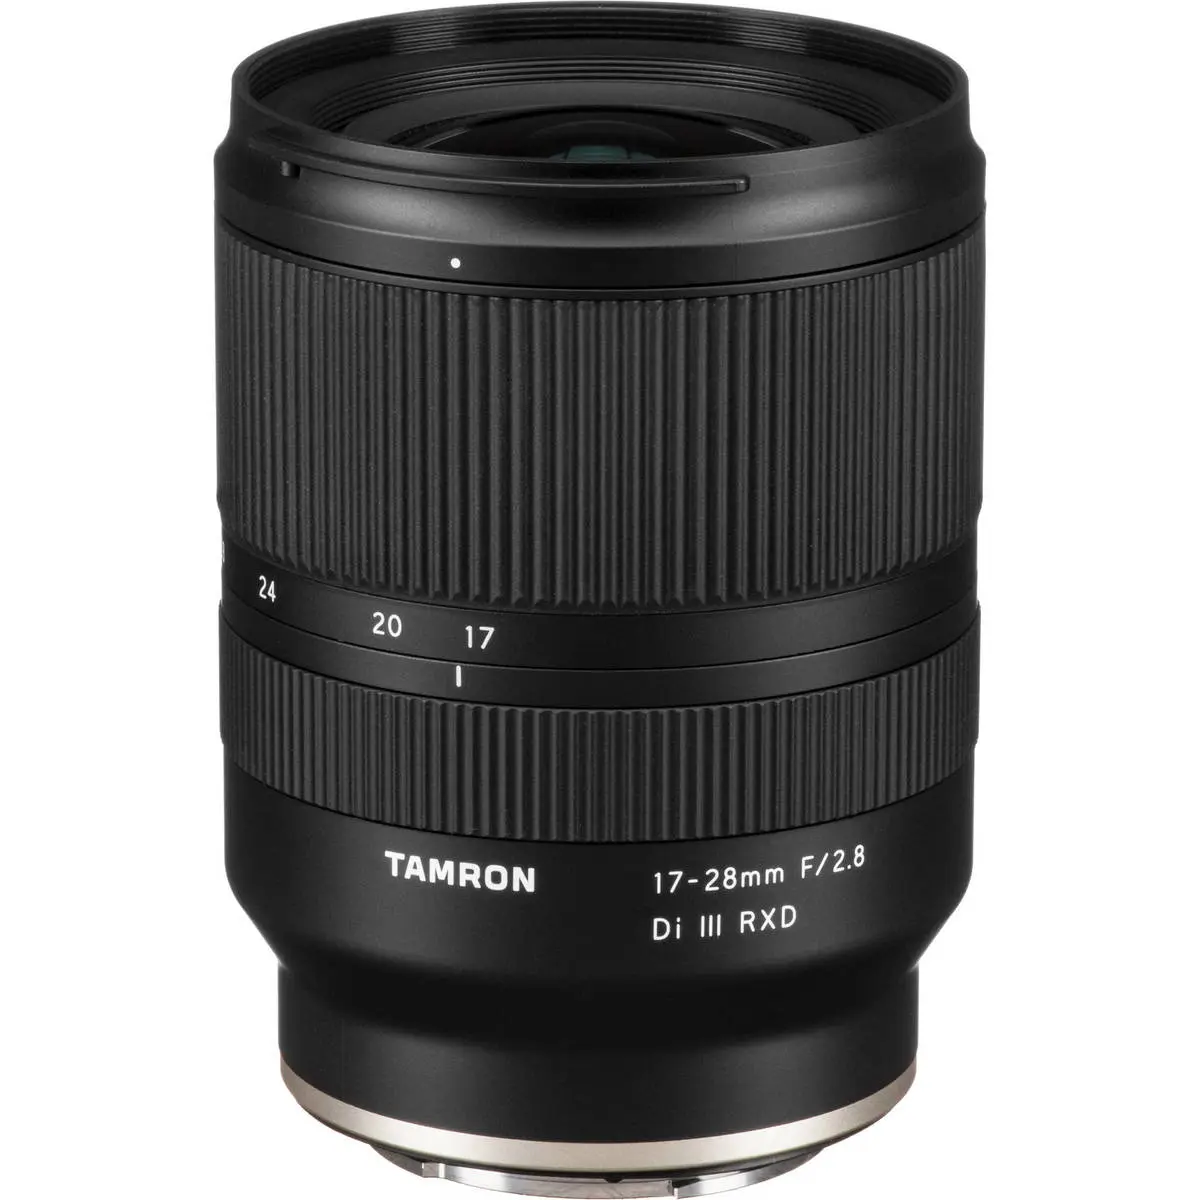 Tamron 17-28mm f/2.8 Di III RXD (A046) Sony E Lens